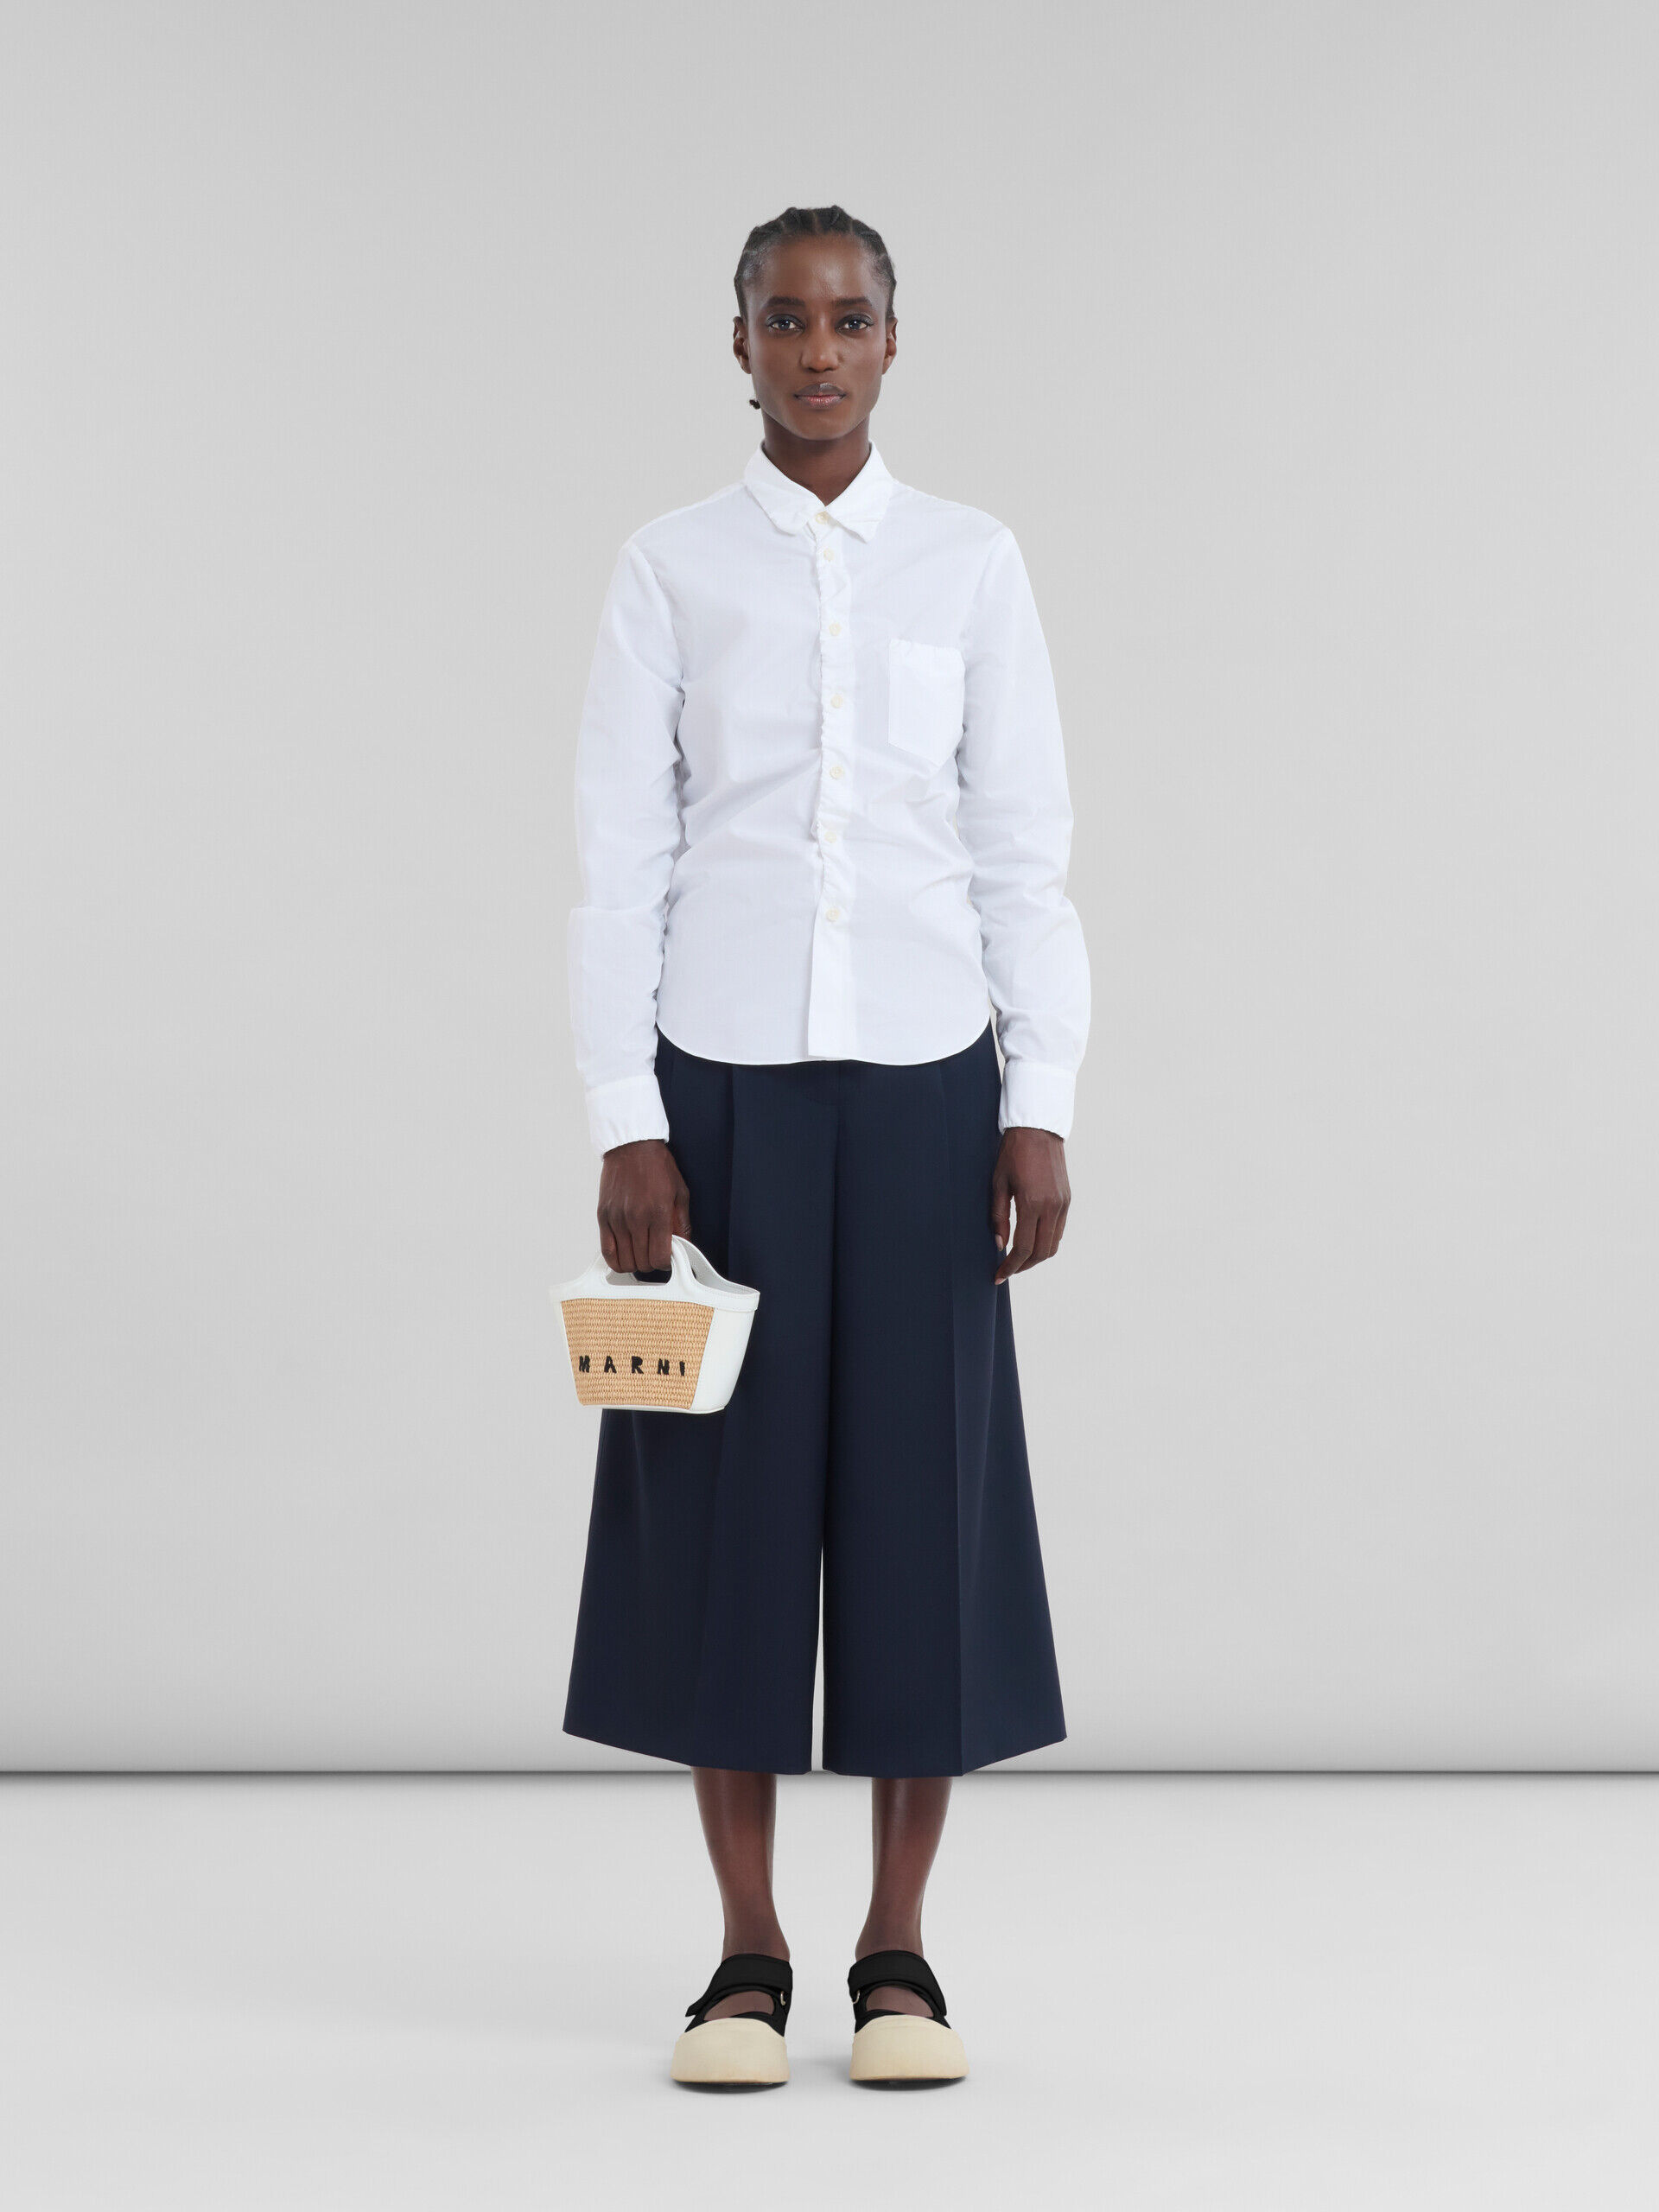 Tropicalia Micro Bag in white leather and raffia-effect fabric | Marni